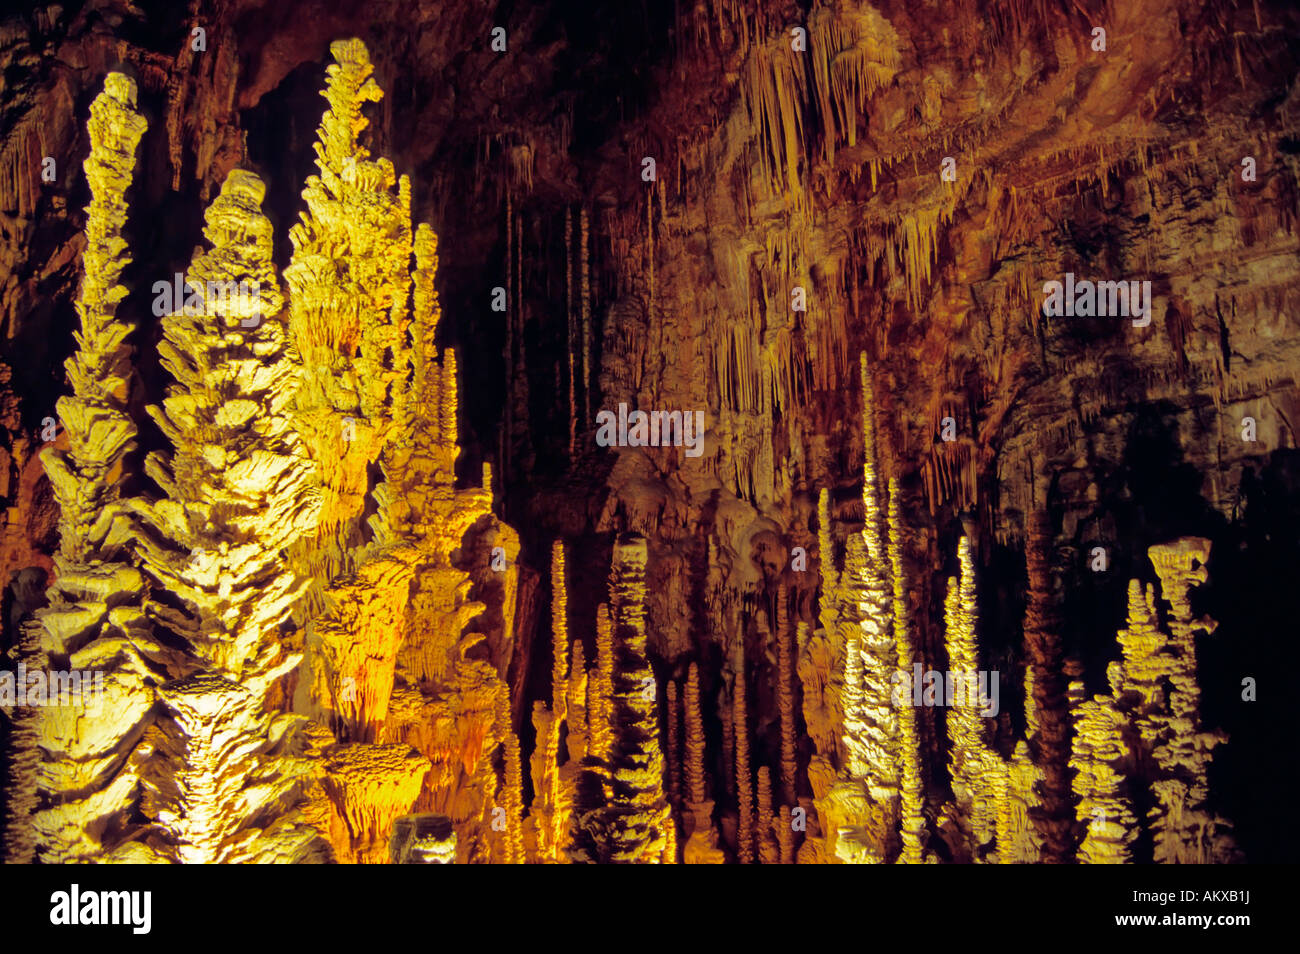 Colourful illuminated dripstone cave, Aven Armand, Lozere, France Stock Photo